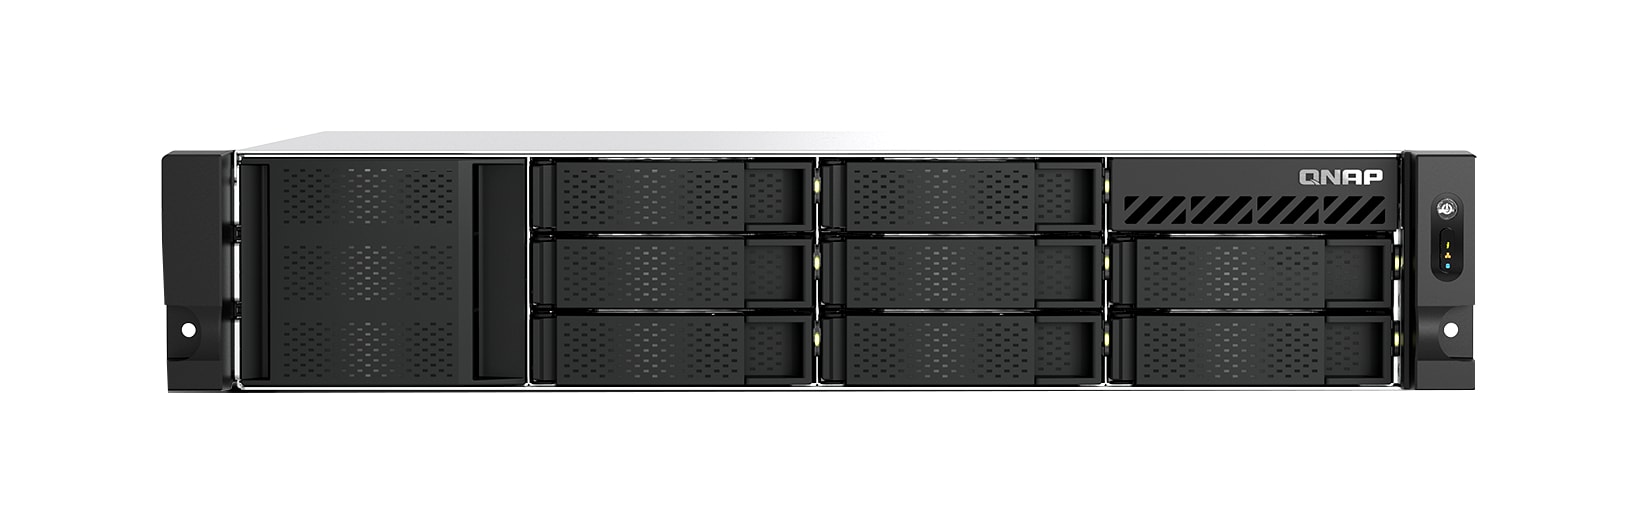 QNAP 2U 8-Bay Network Attached Storage Enclosure